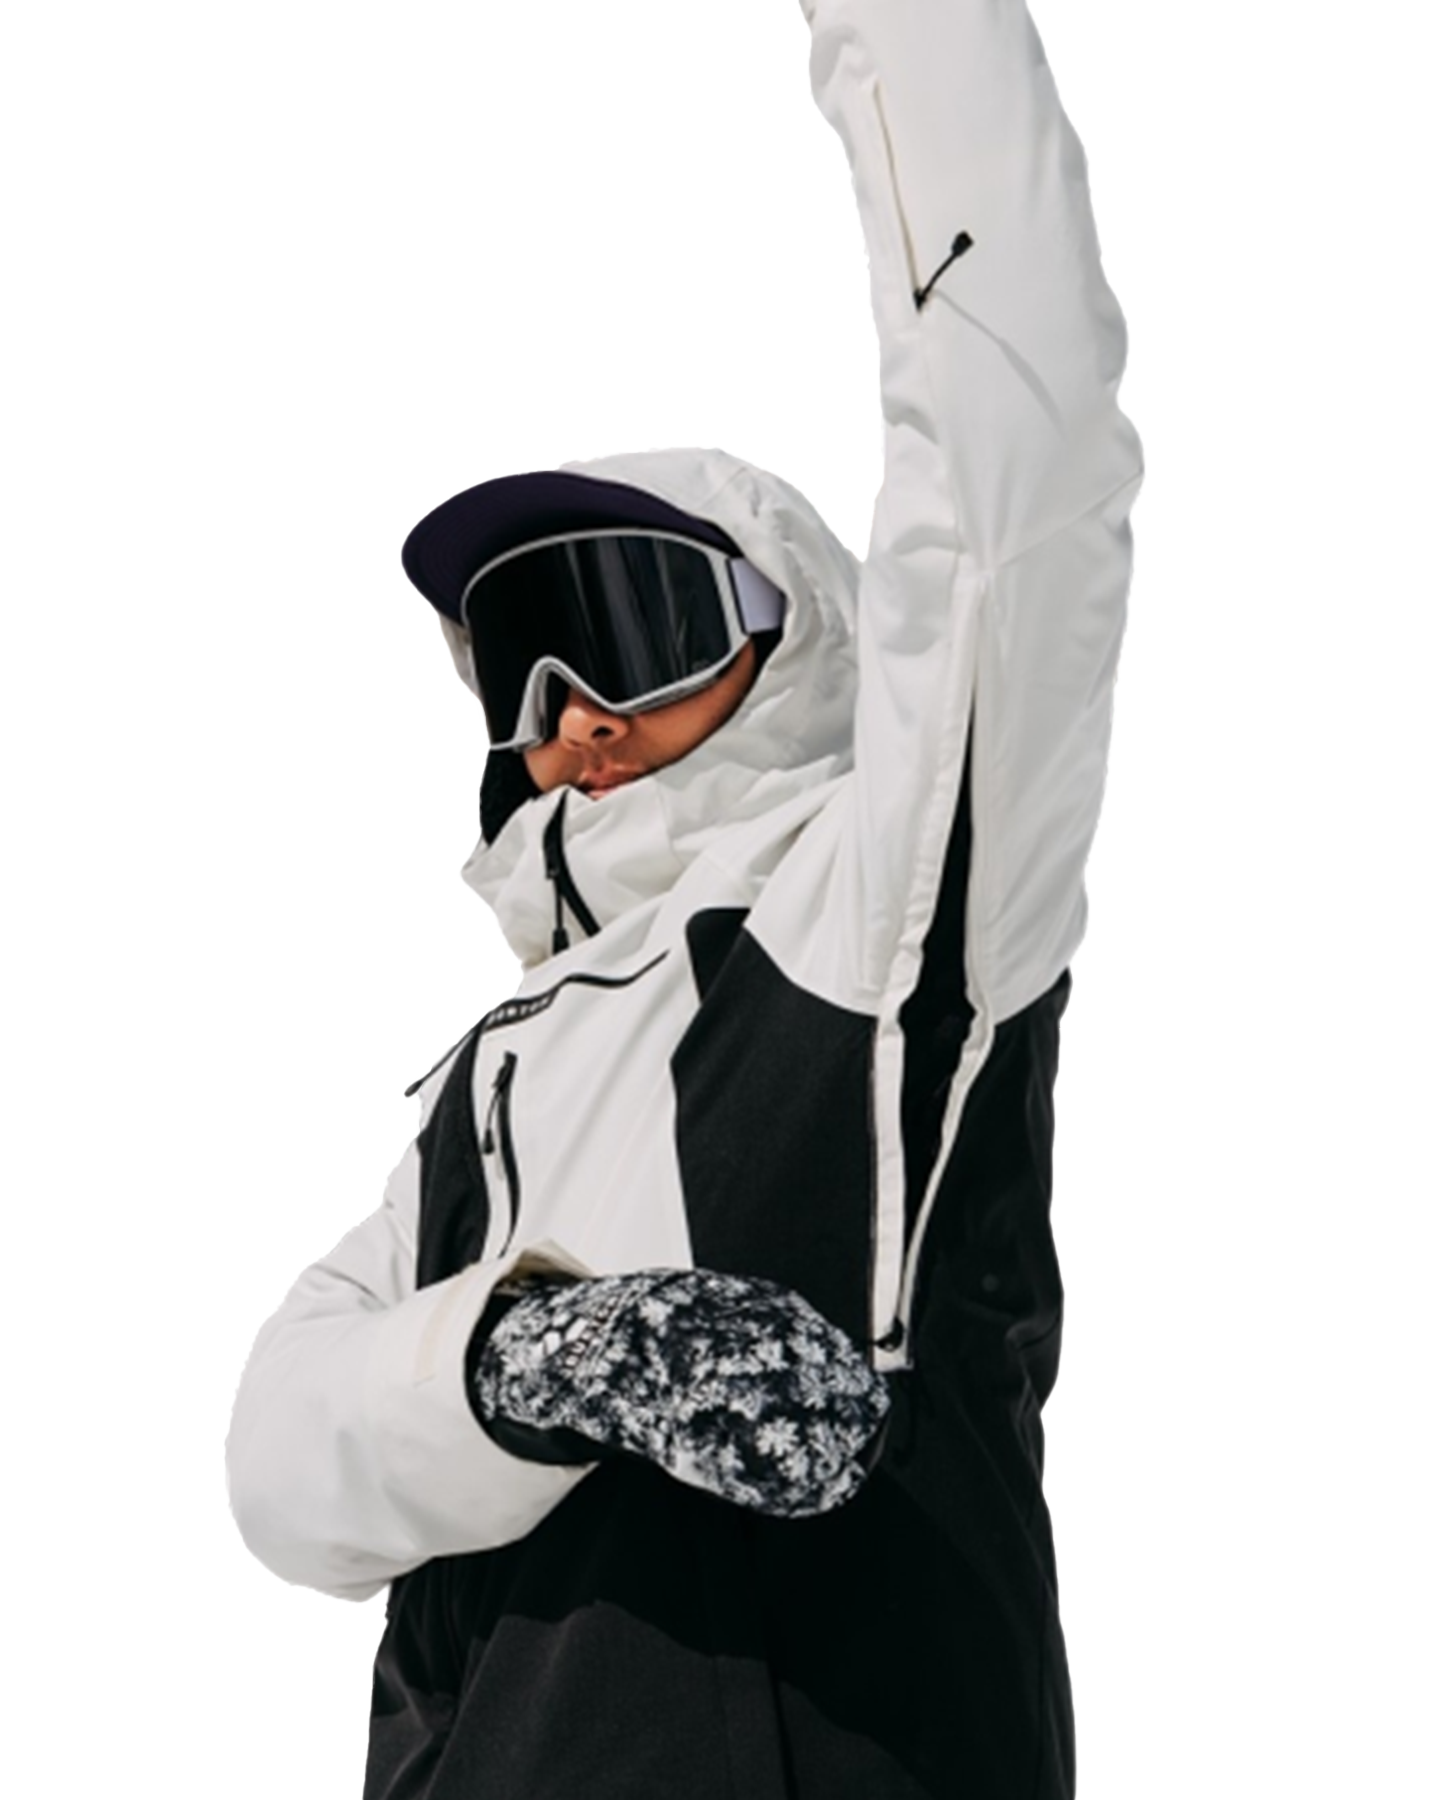 Burton Men's Lodgepole 2L Snow Jacket - Stout White/True Black Men's Snow Jackets - Trojan Wake Ski Snow